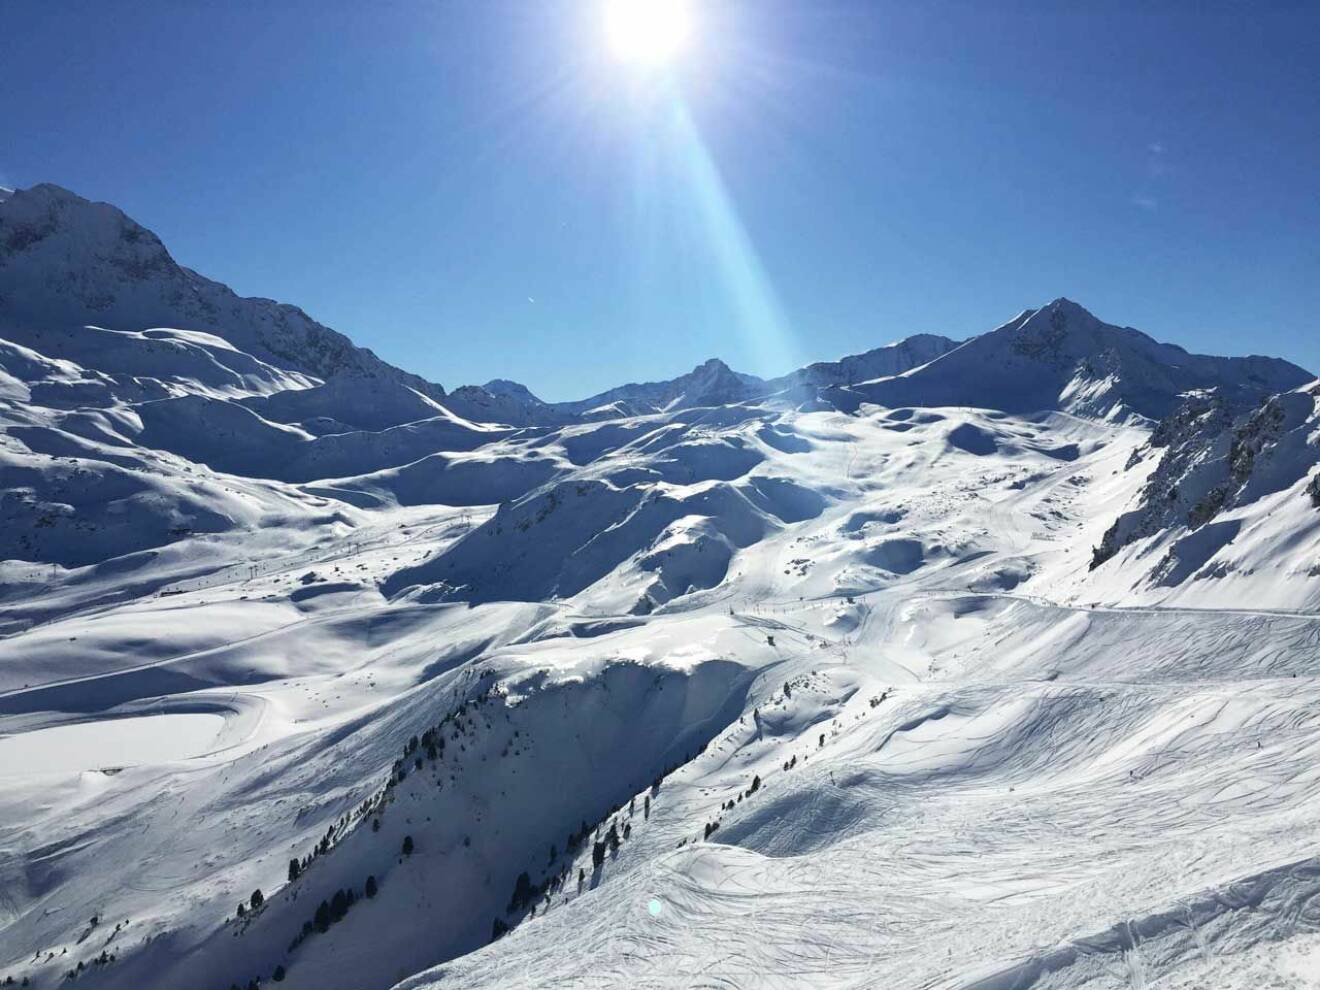 Les Arcs är samlingsnamnet på fyra bilfria skidorter i Bourg-Saint-Maurice kommun i Vanoisedalen i Tarentaise, Savoie, Frankrike. Les Arcs ingår i skidområdet Paradiski vars huvudområden är förbundna med kabinbanan Vanoise Express.